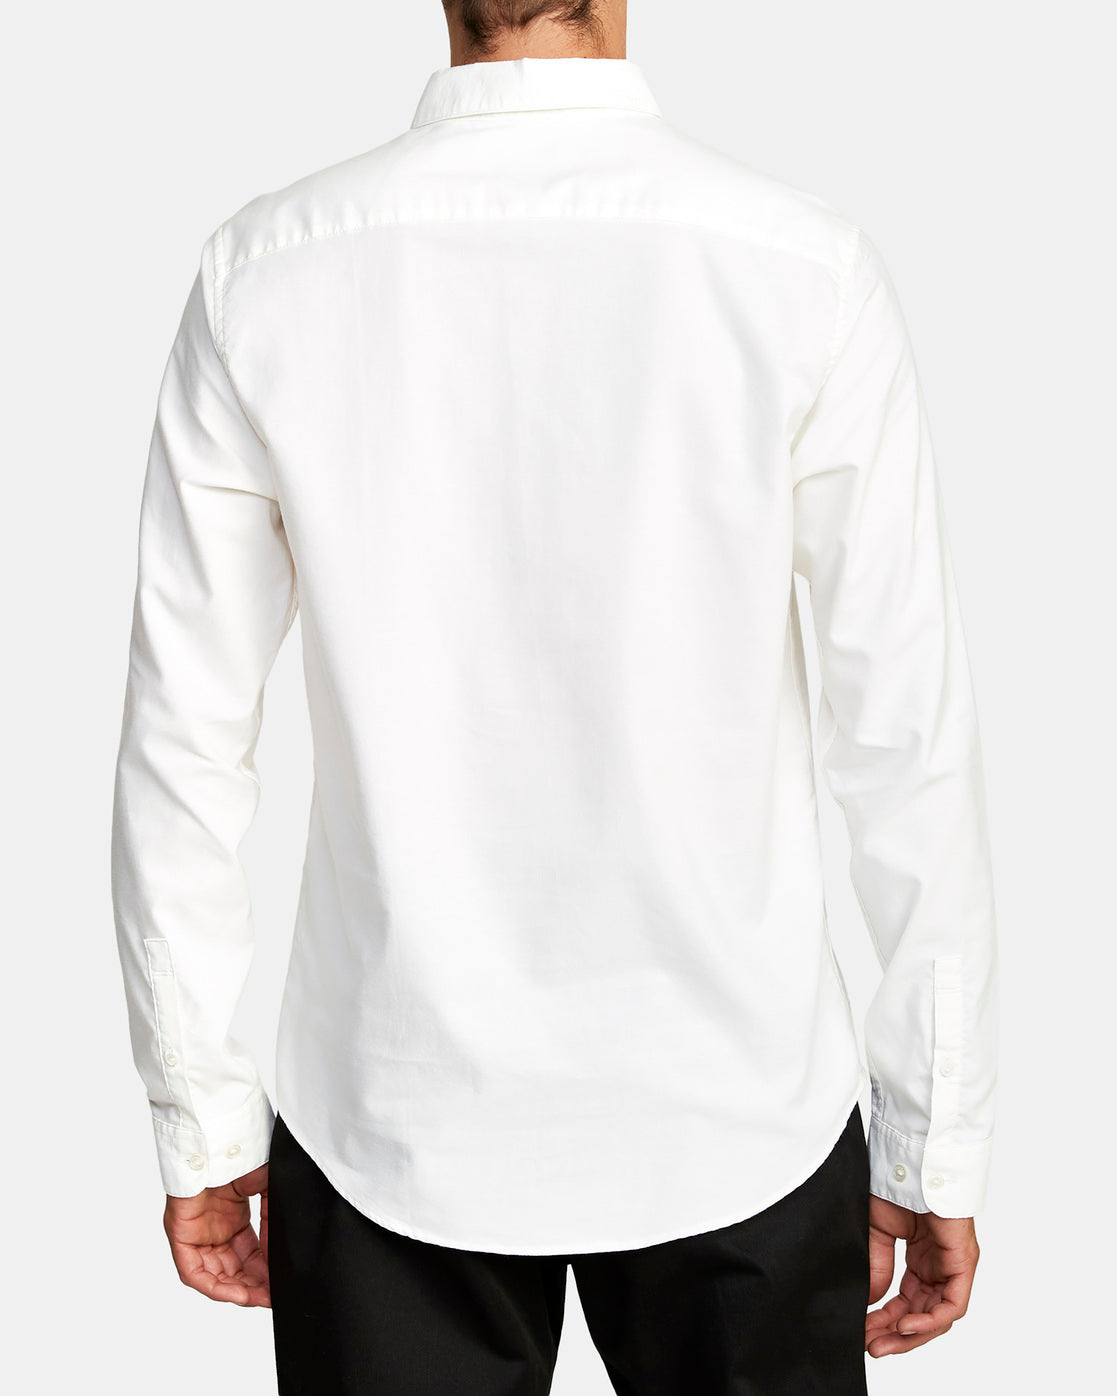 RVCA Thatll Do Stretch Long Sleeve Shirt - White